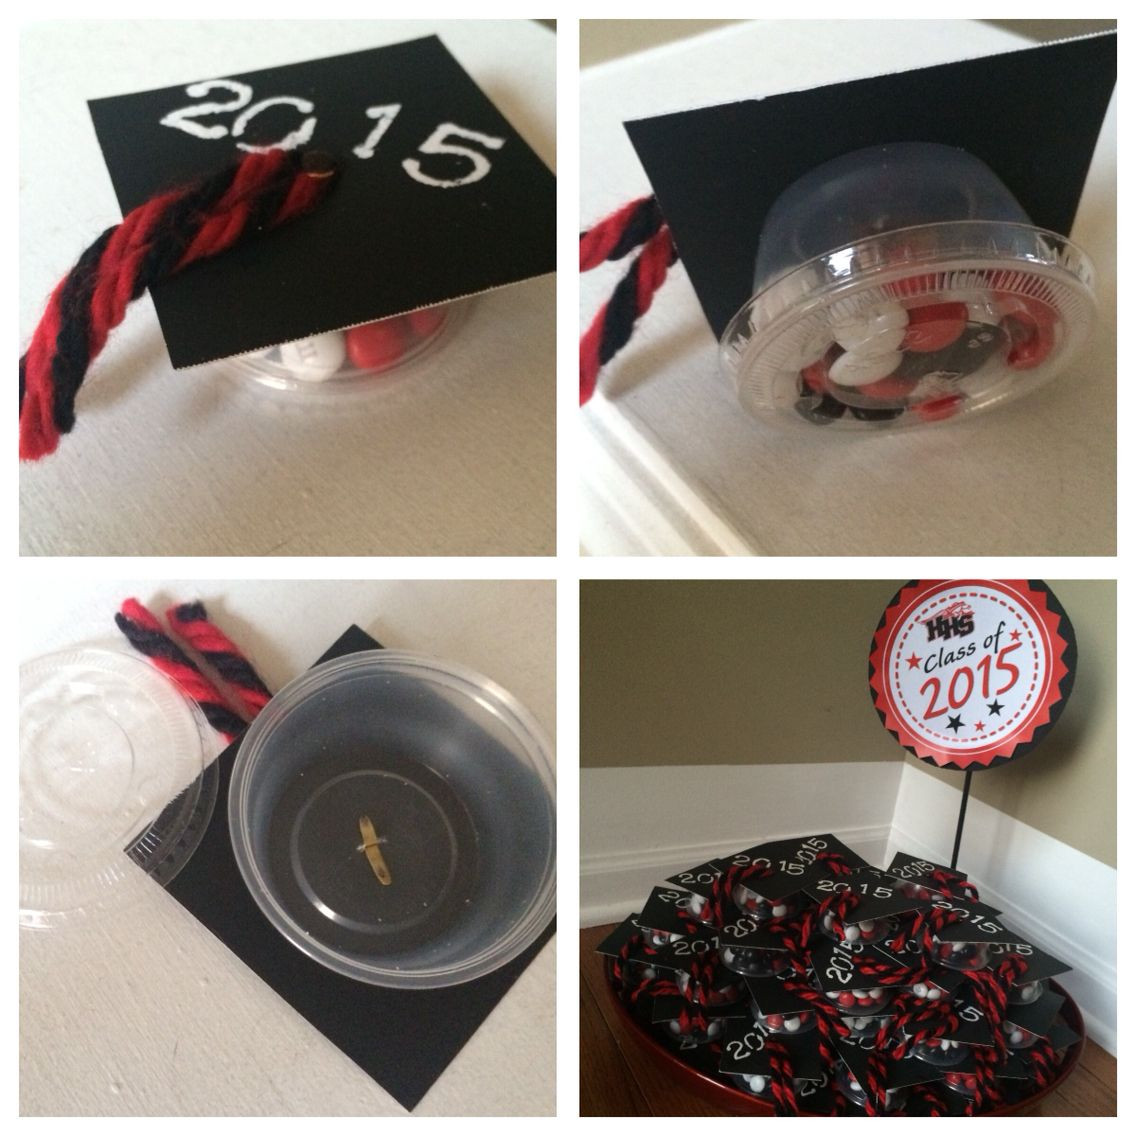 Ideas For College Graduation Party Favors
 Graduation Party Favors I made these using 3"x3" black